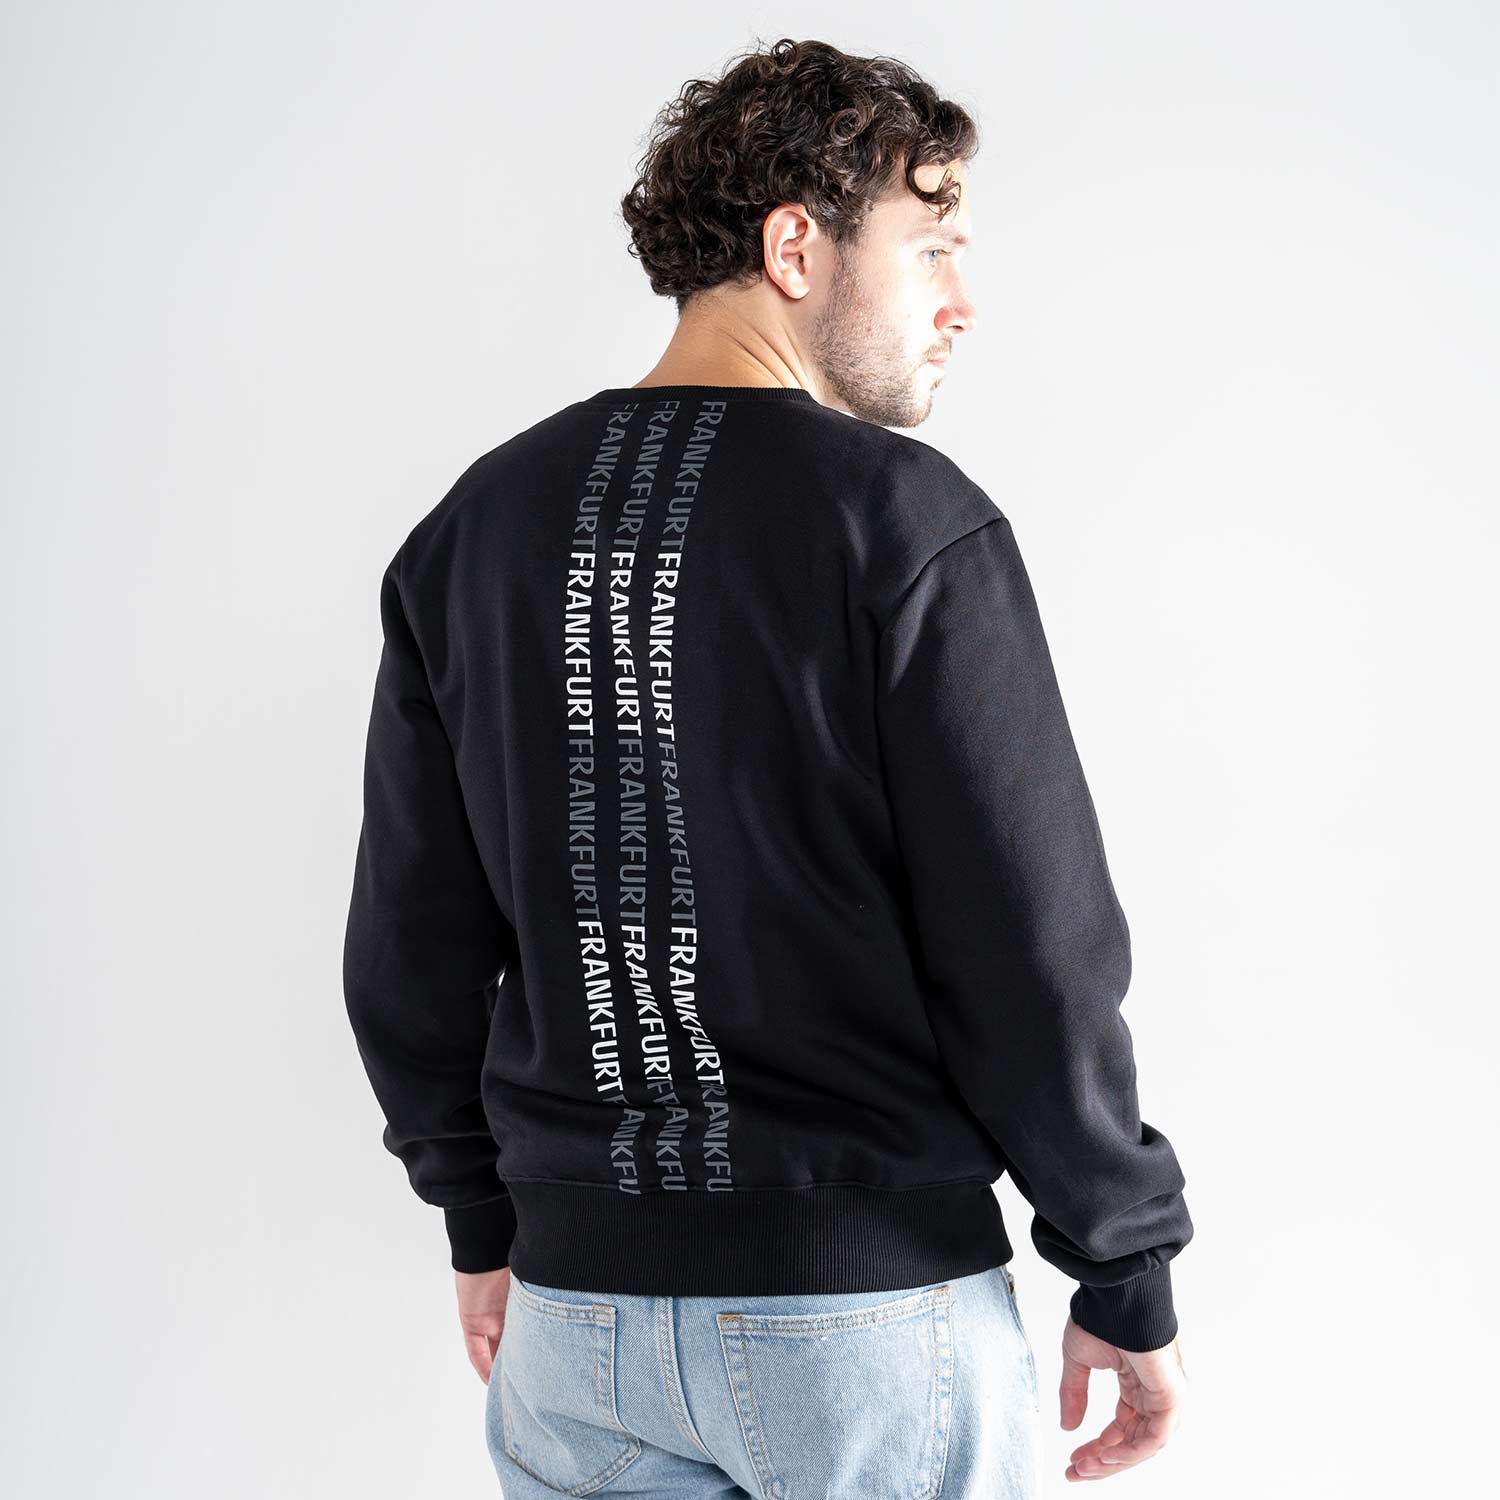 Bild 5: Sweater Backstripes